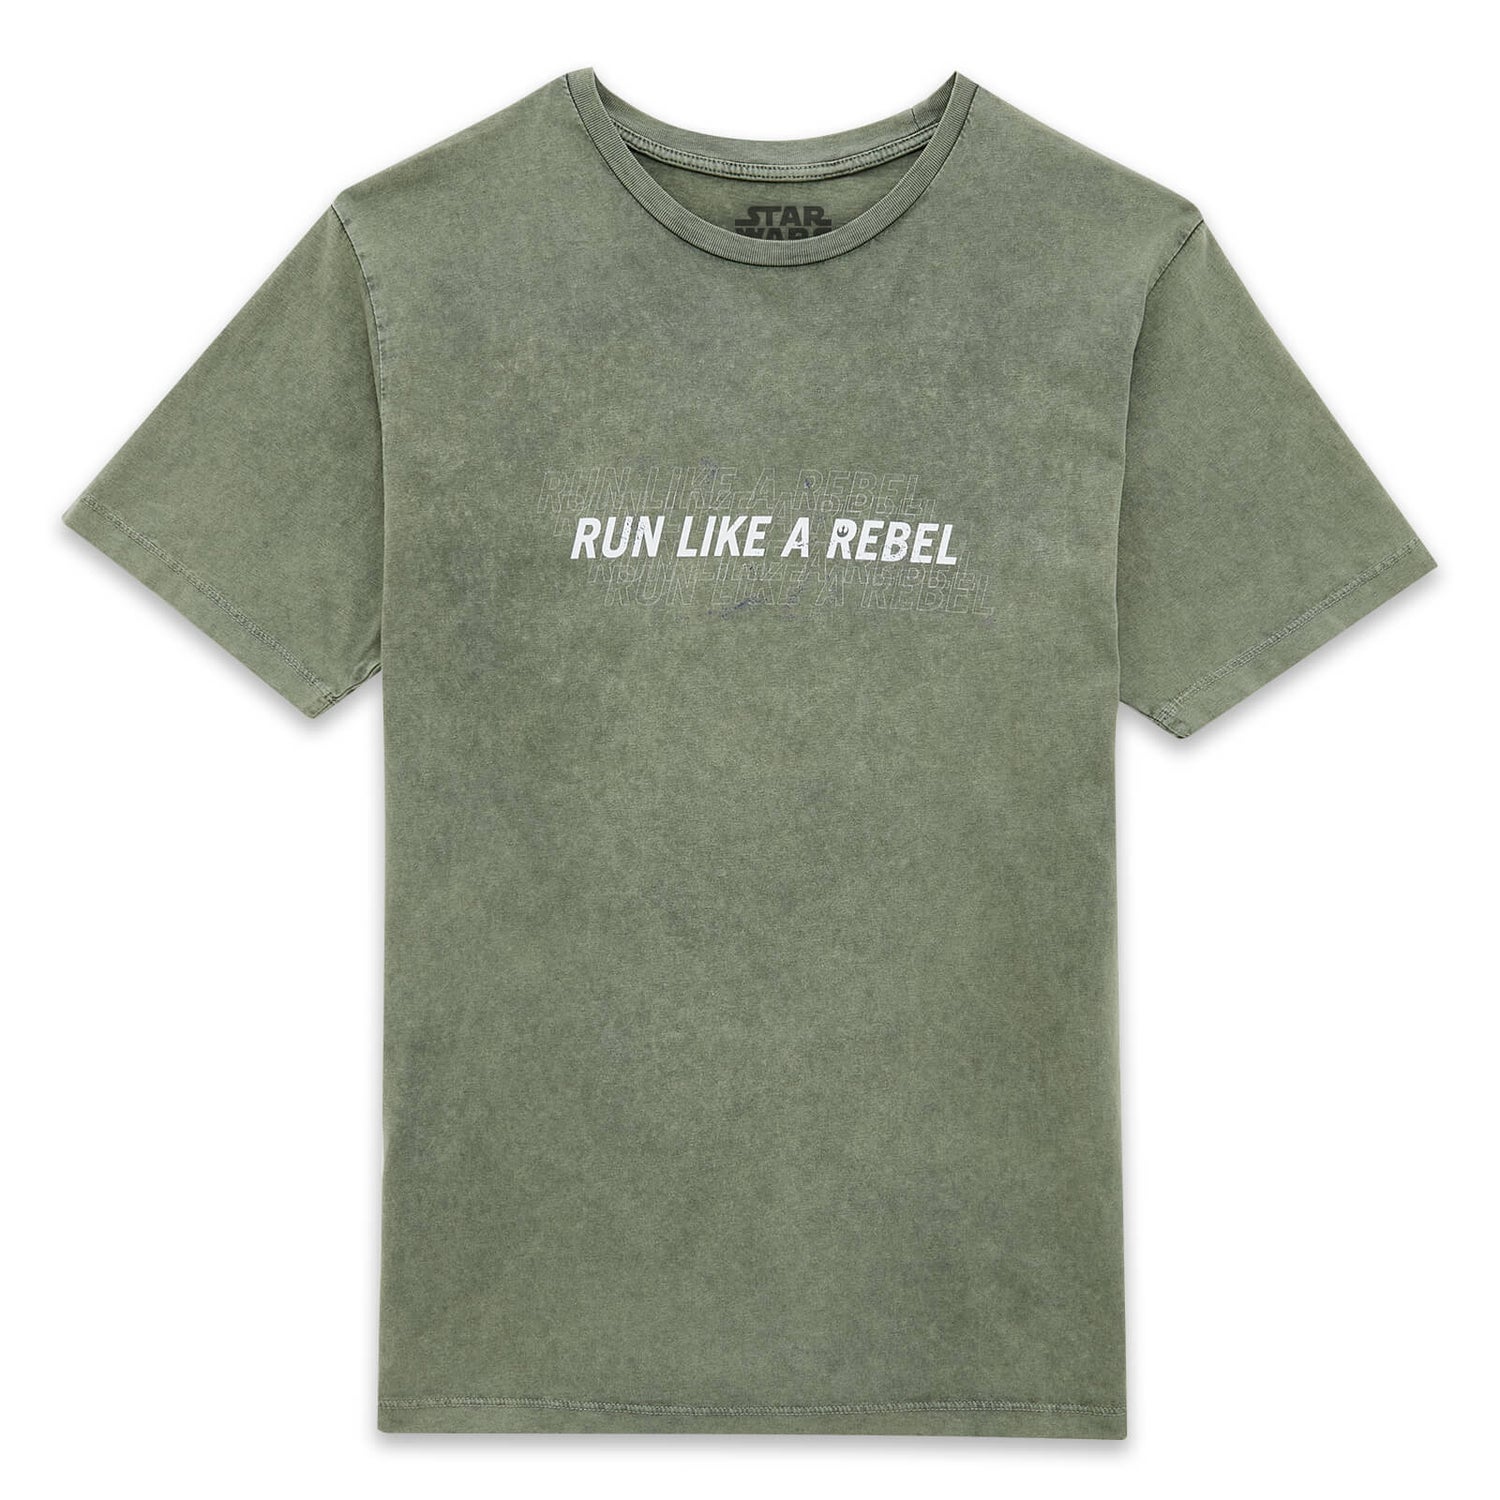 Camiseta unisex Run Like A Rebel de Star Wars - Lavado ácido caqui